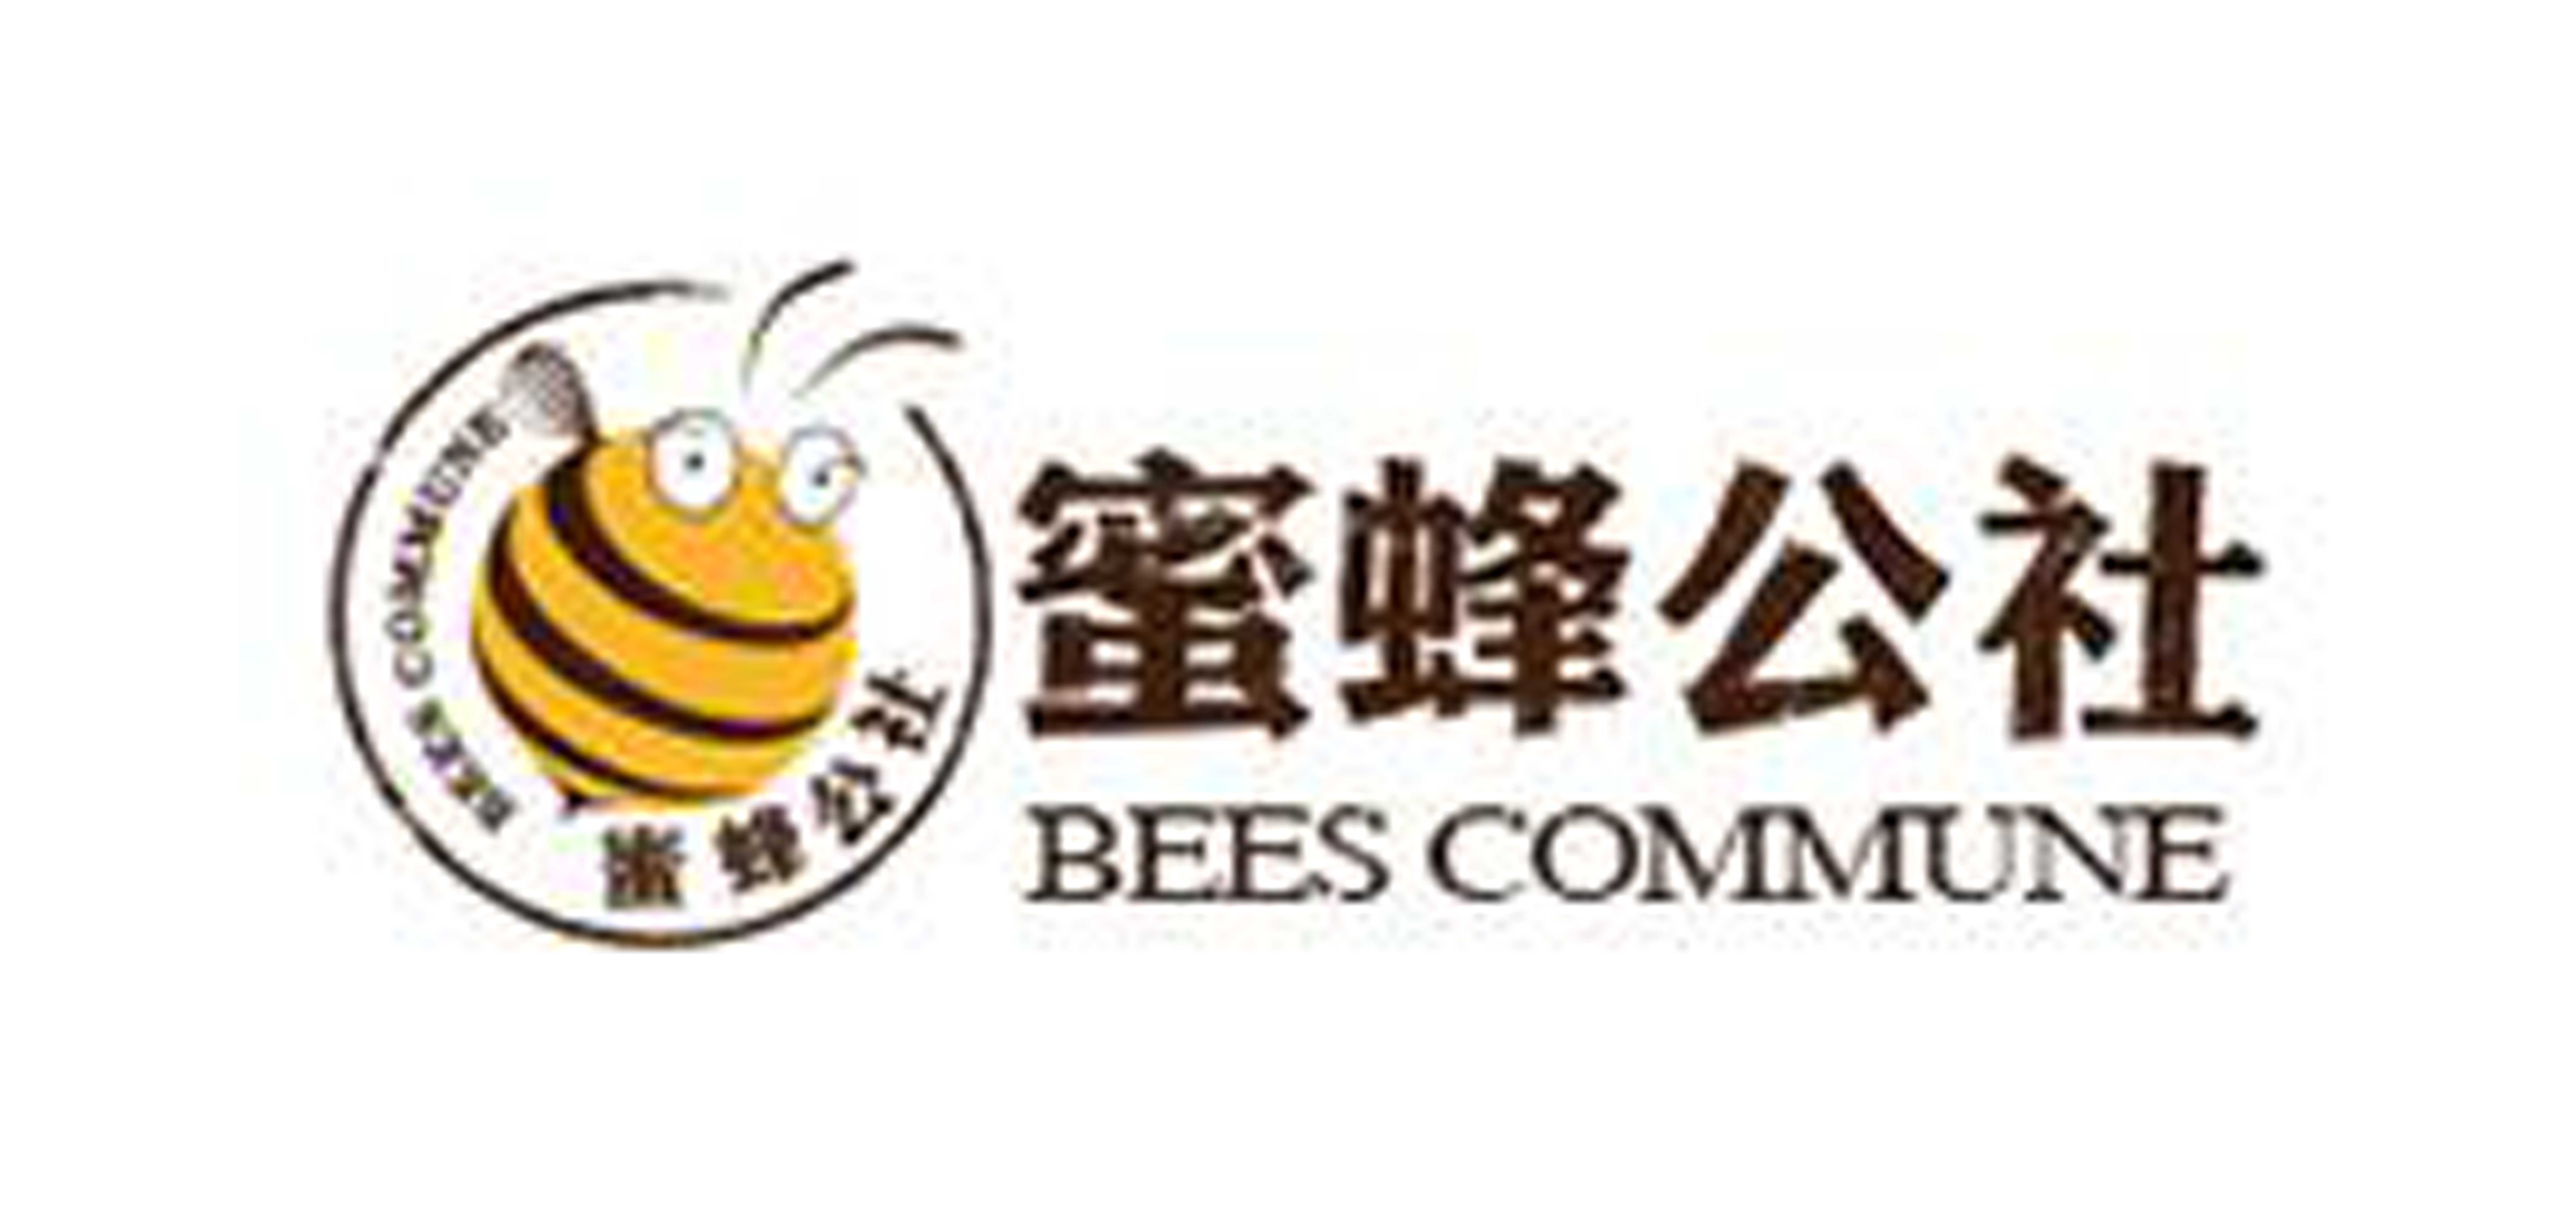 BEES COMMUNE是什么牌子_蜜蜂公社品牌怎么样?